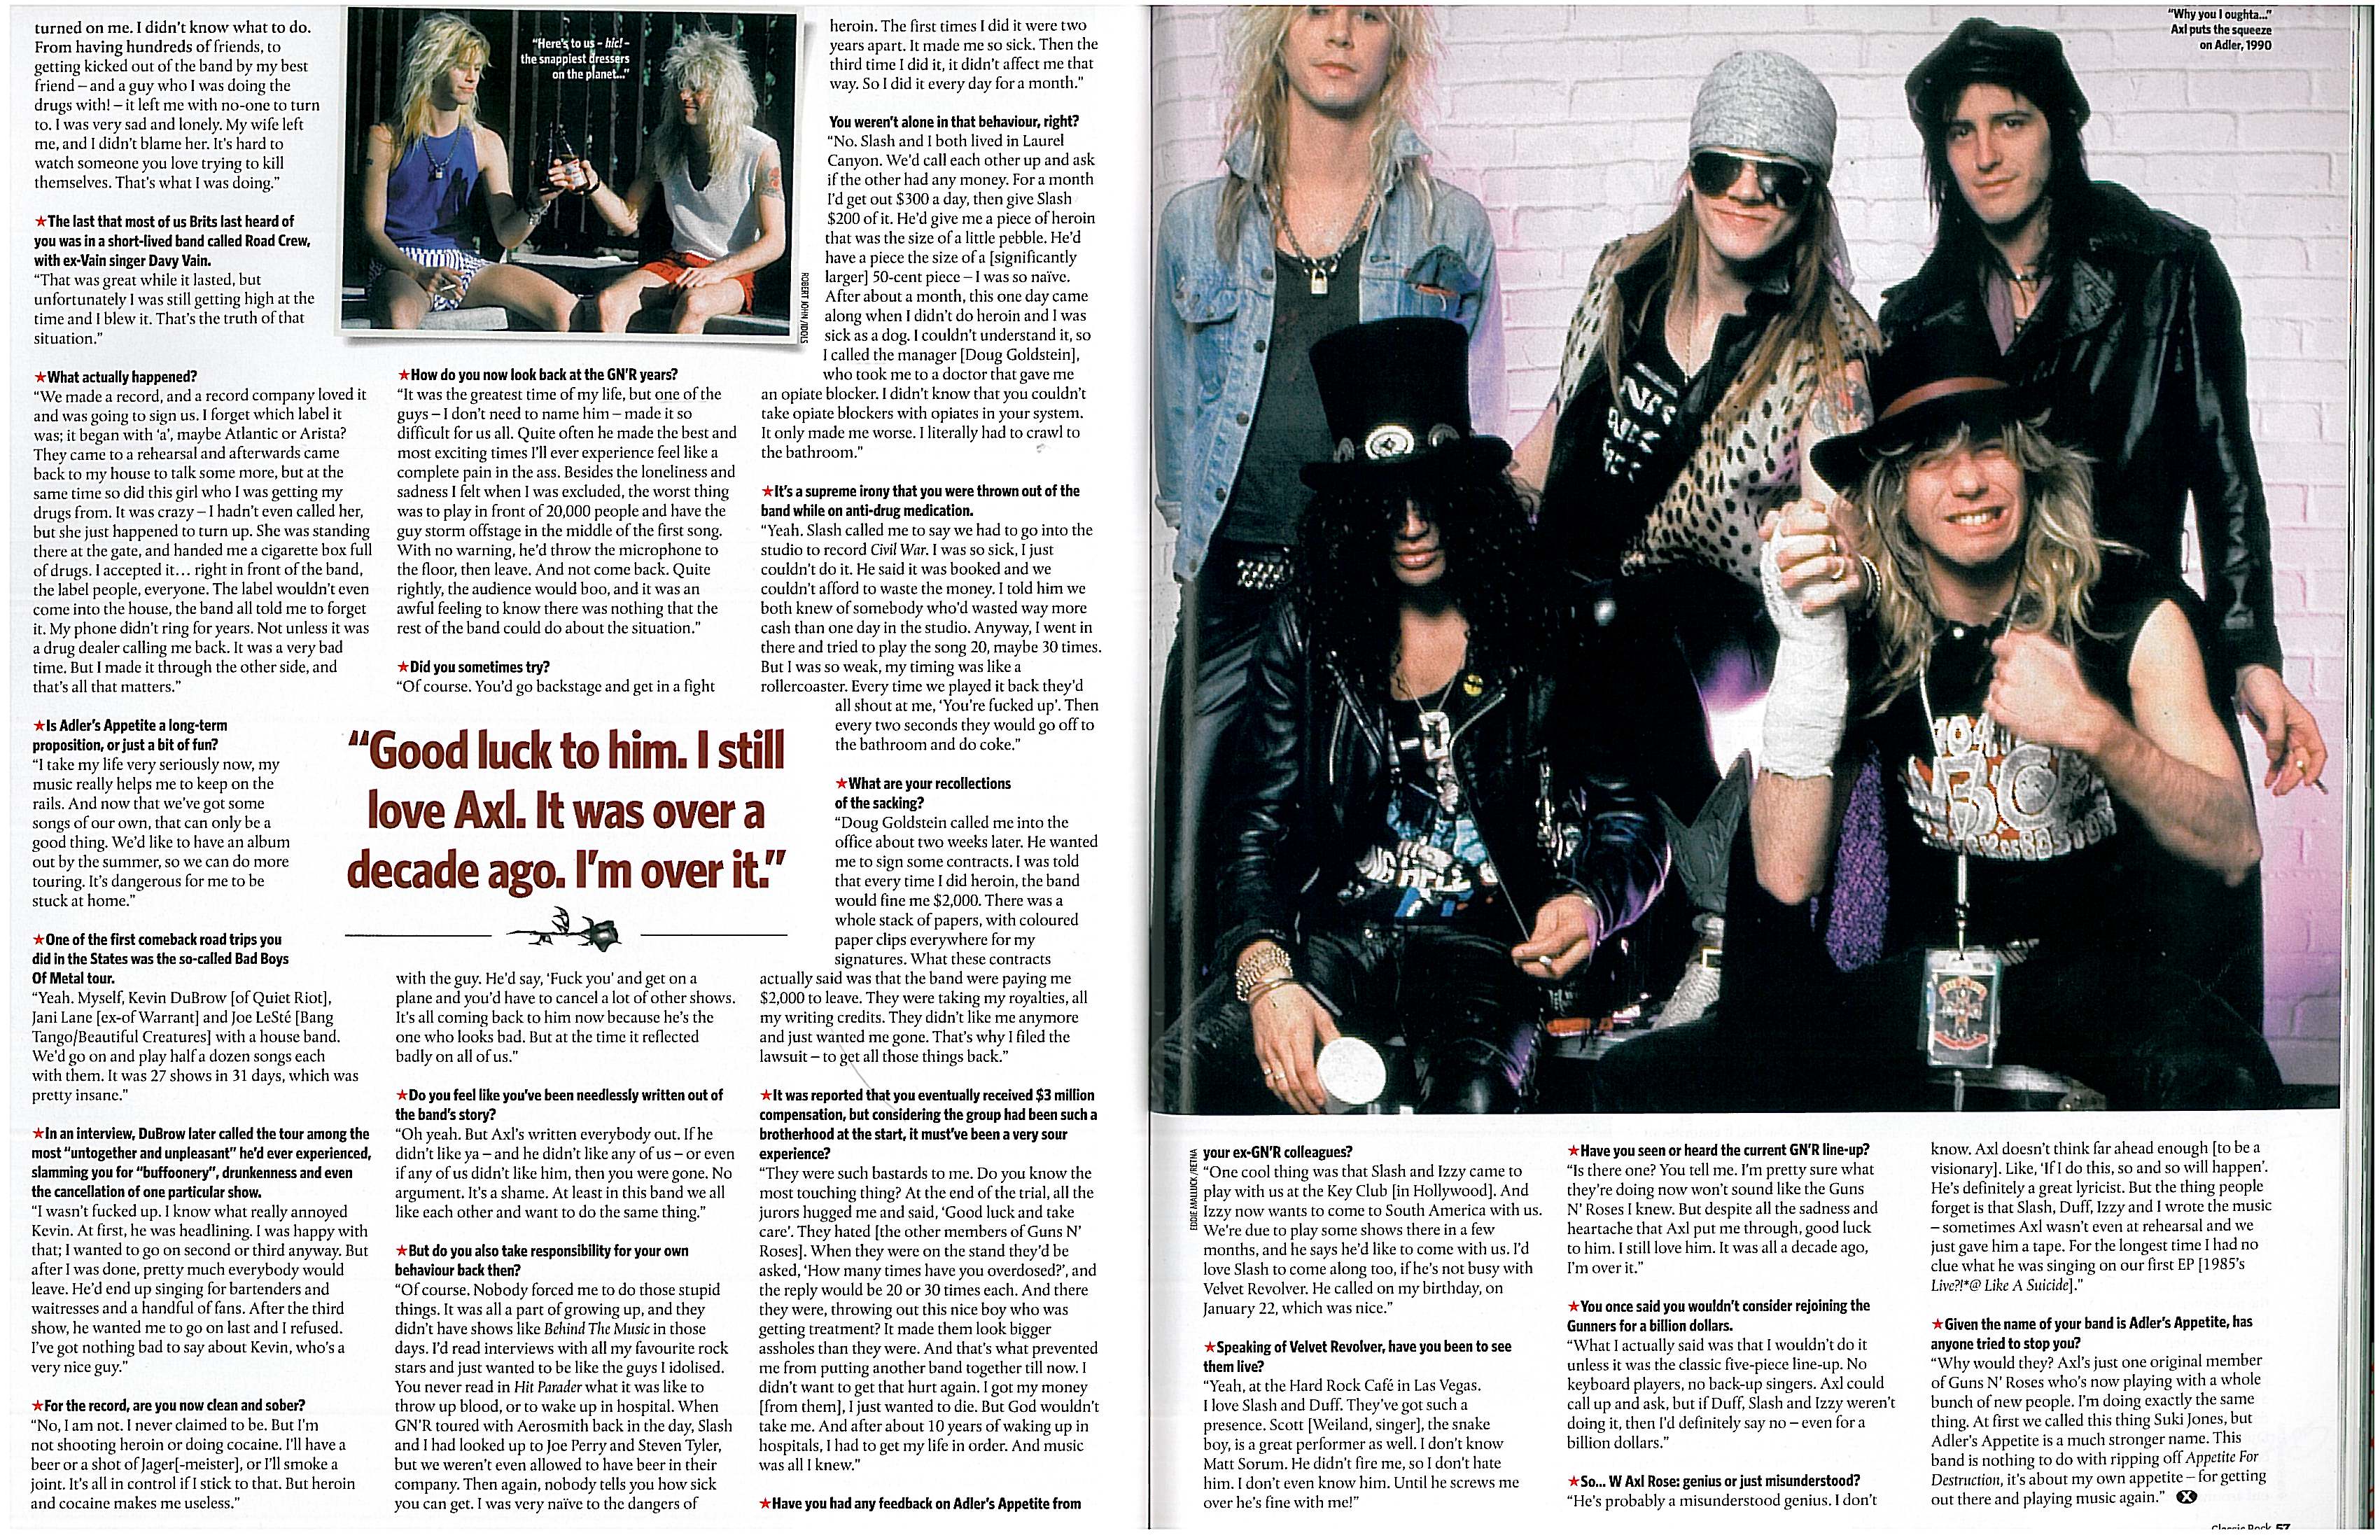 2005.04.DD - Classic Rock - The Days of Wine and Roses (Slash, Duff, Steven, Matt) 4gfQYlar_o